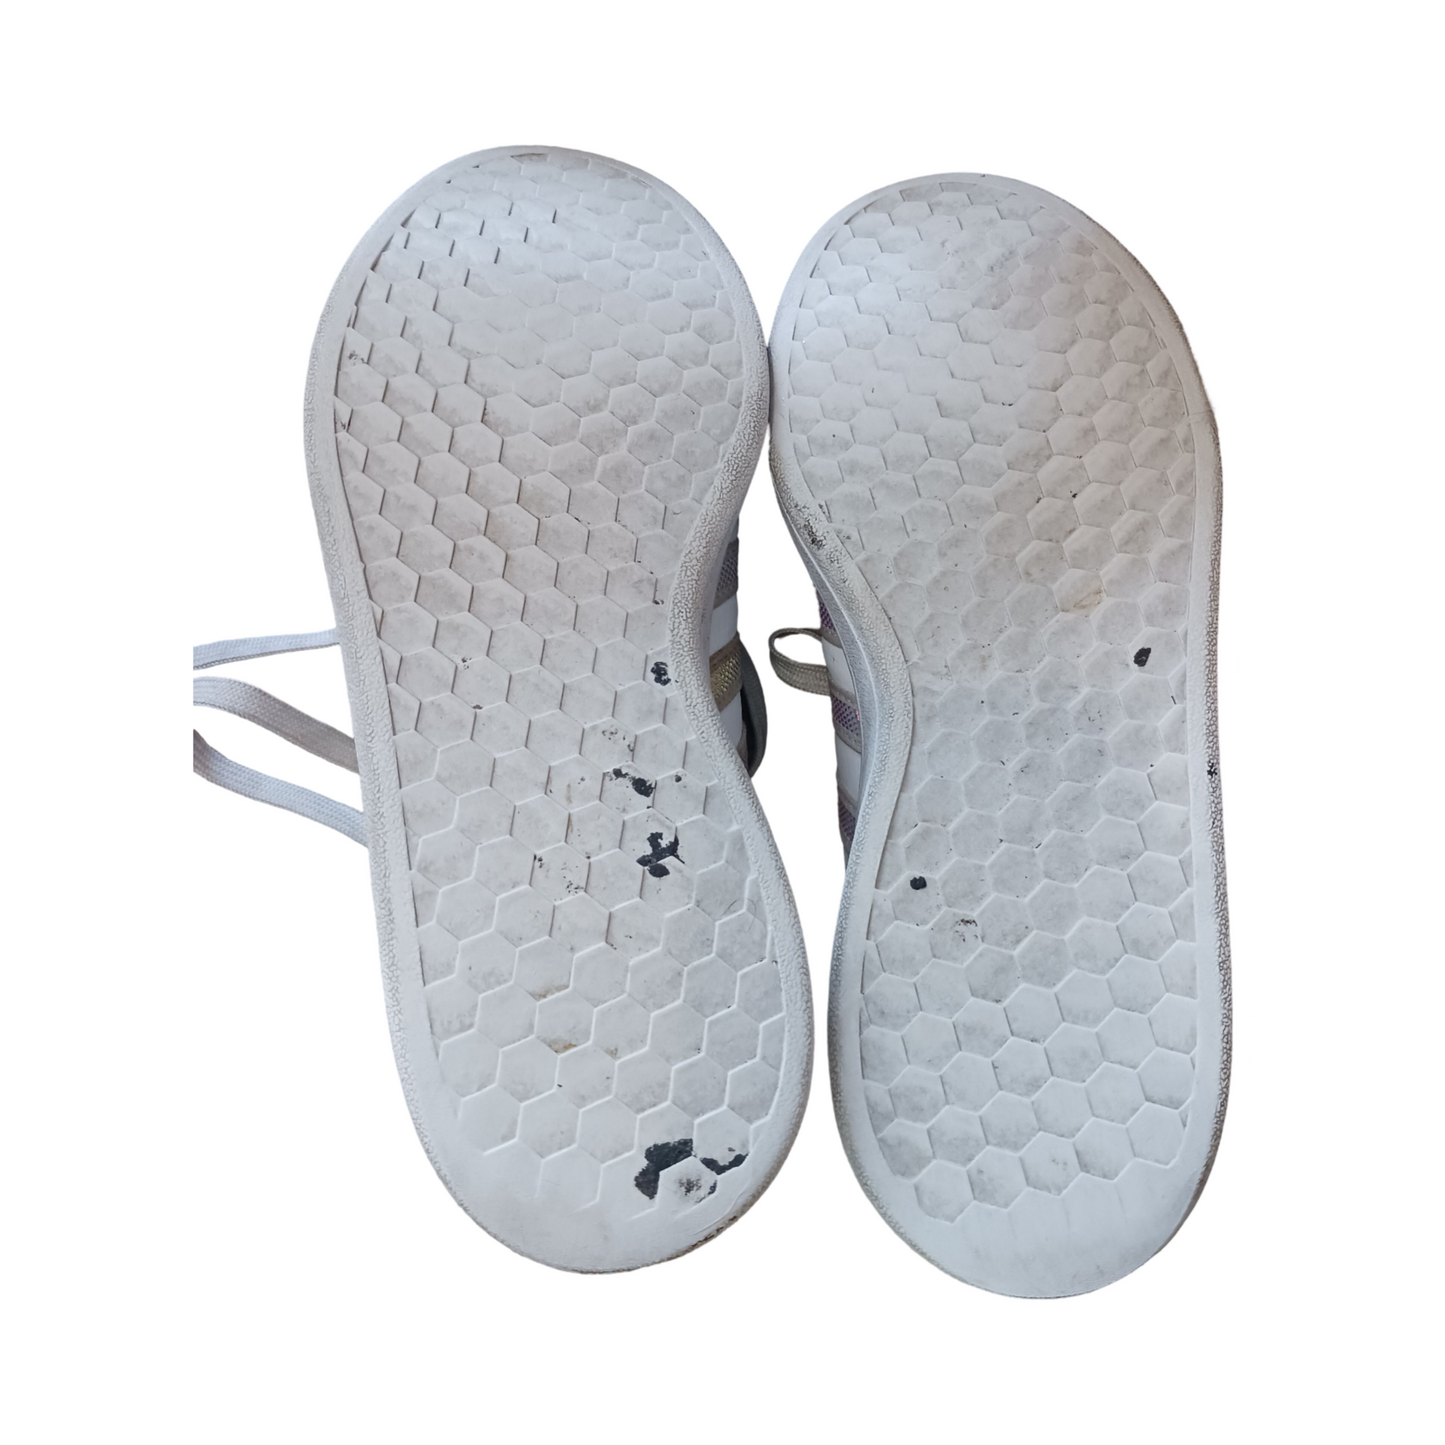 Adidas White Shoes, Cloudfoam, Size 7